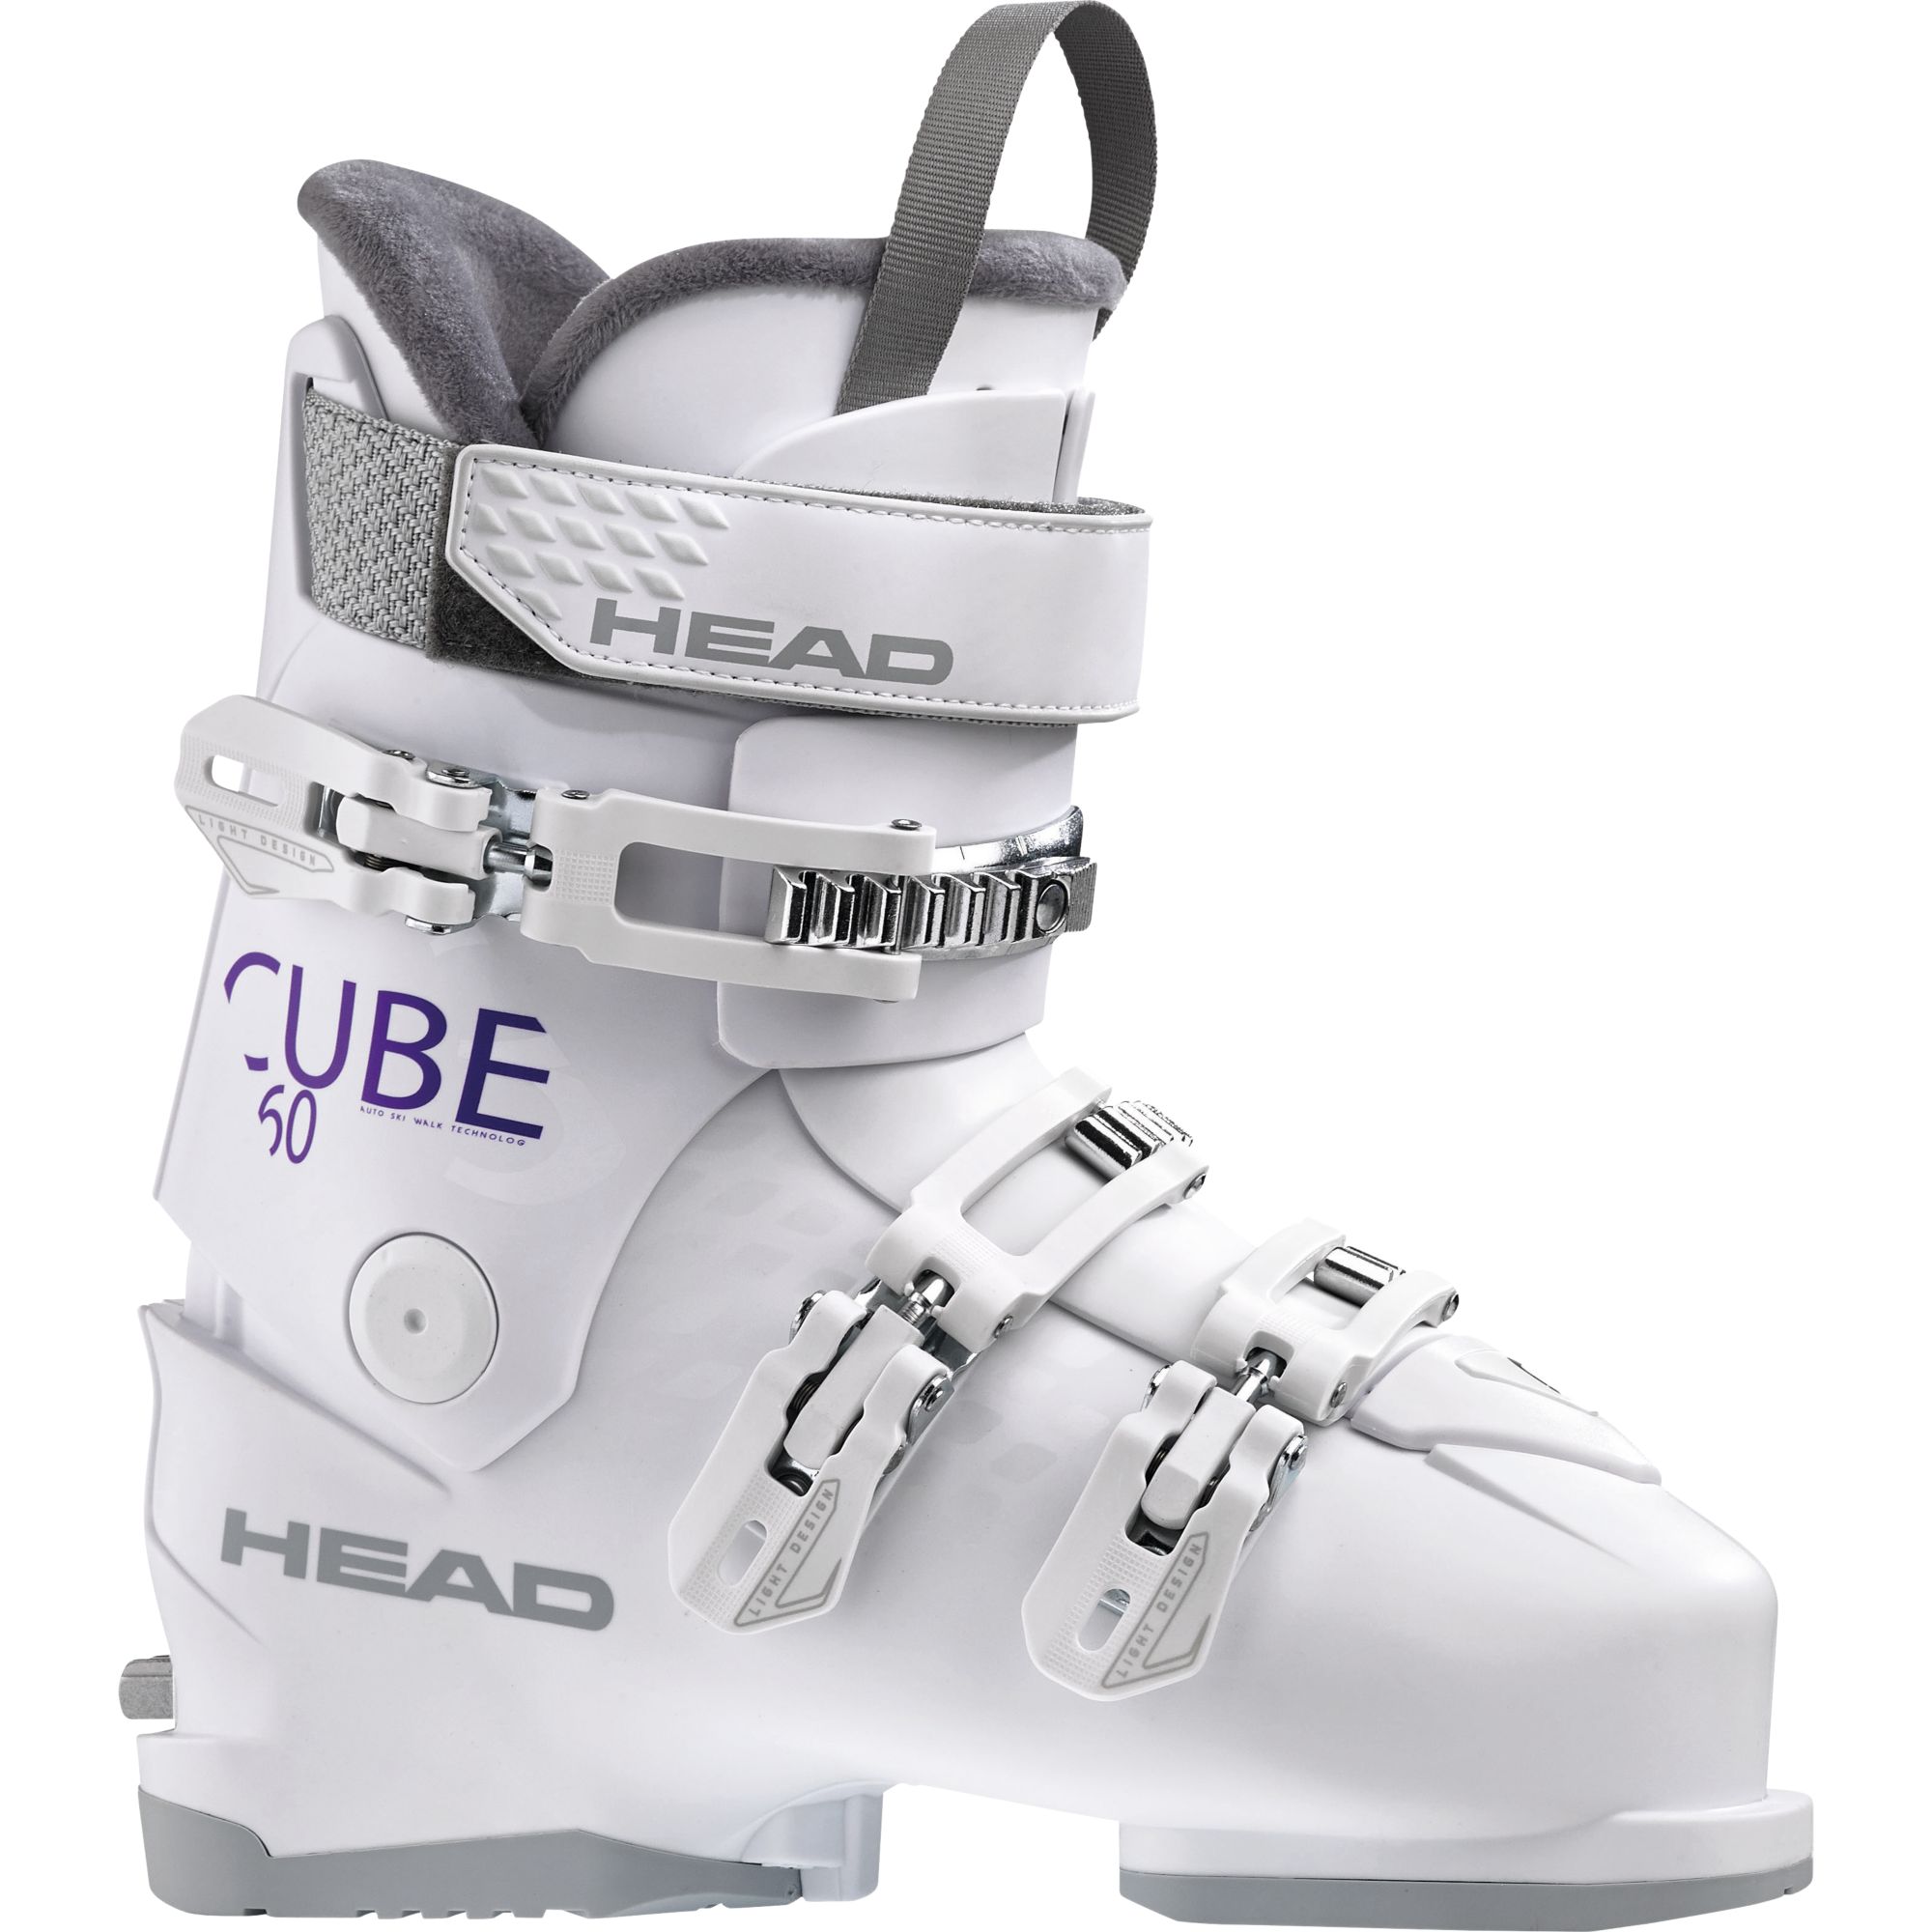 Cube 3 60 W Head - 2400706